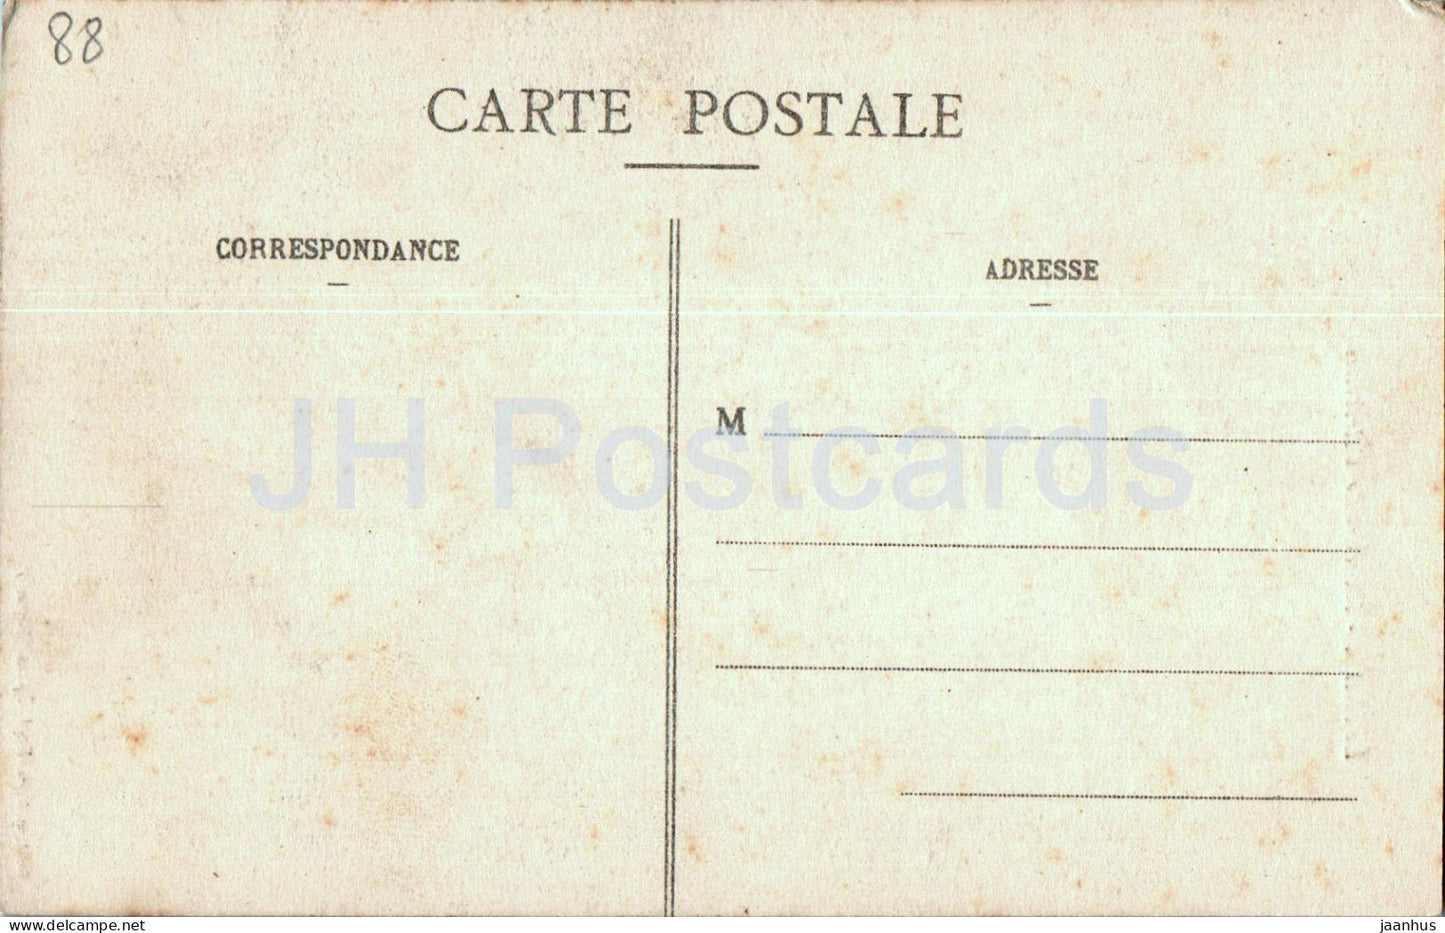 Epinal - Roches route d'Archettes - alte Postkarte - Frankreich - unbenutzt 